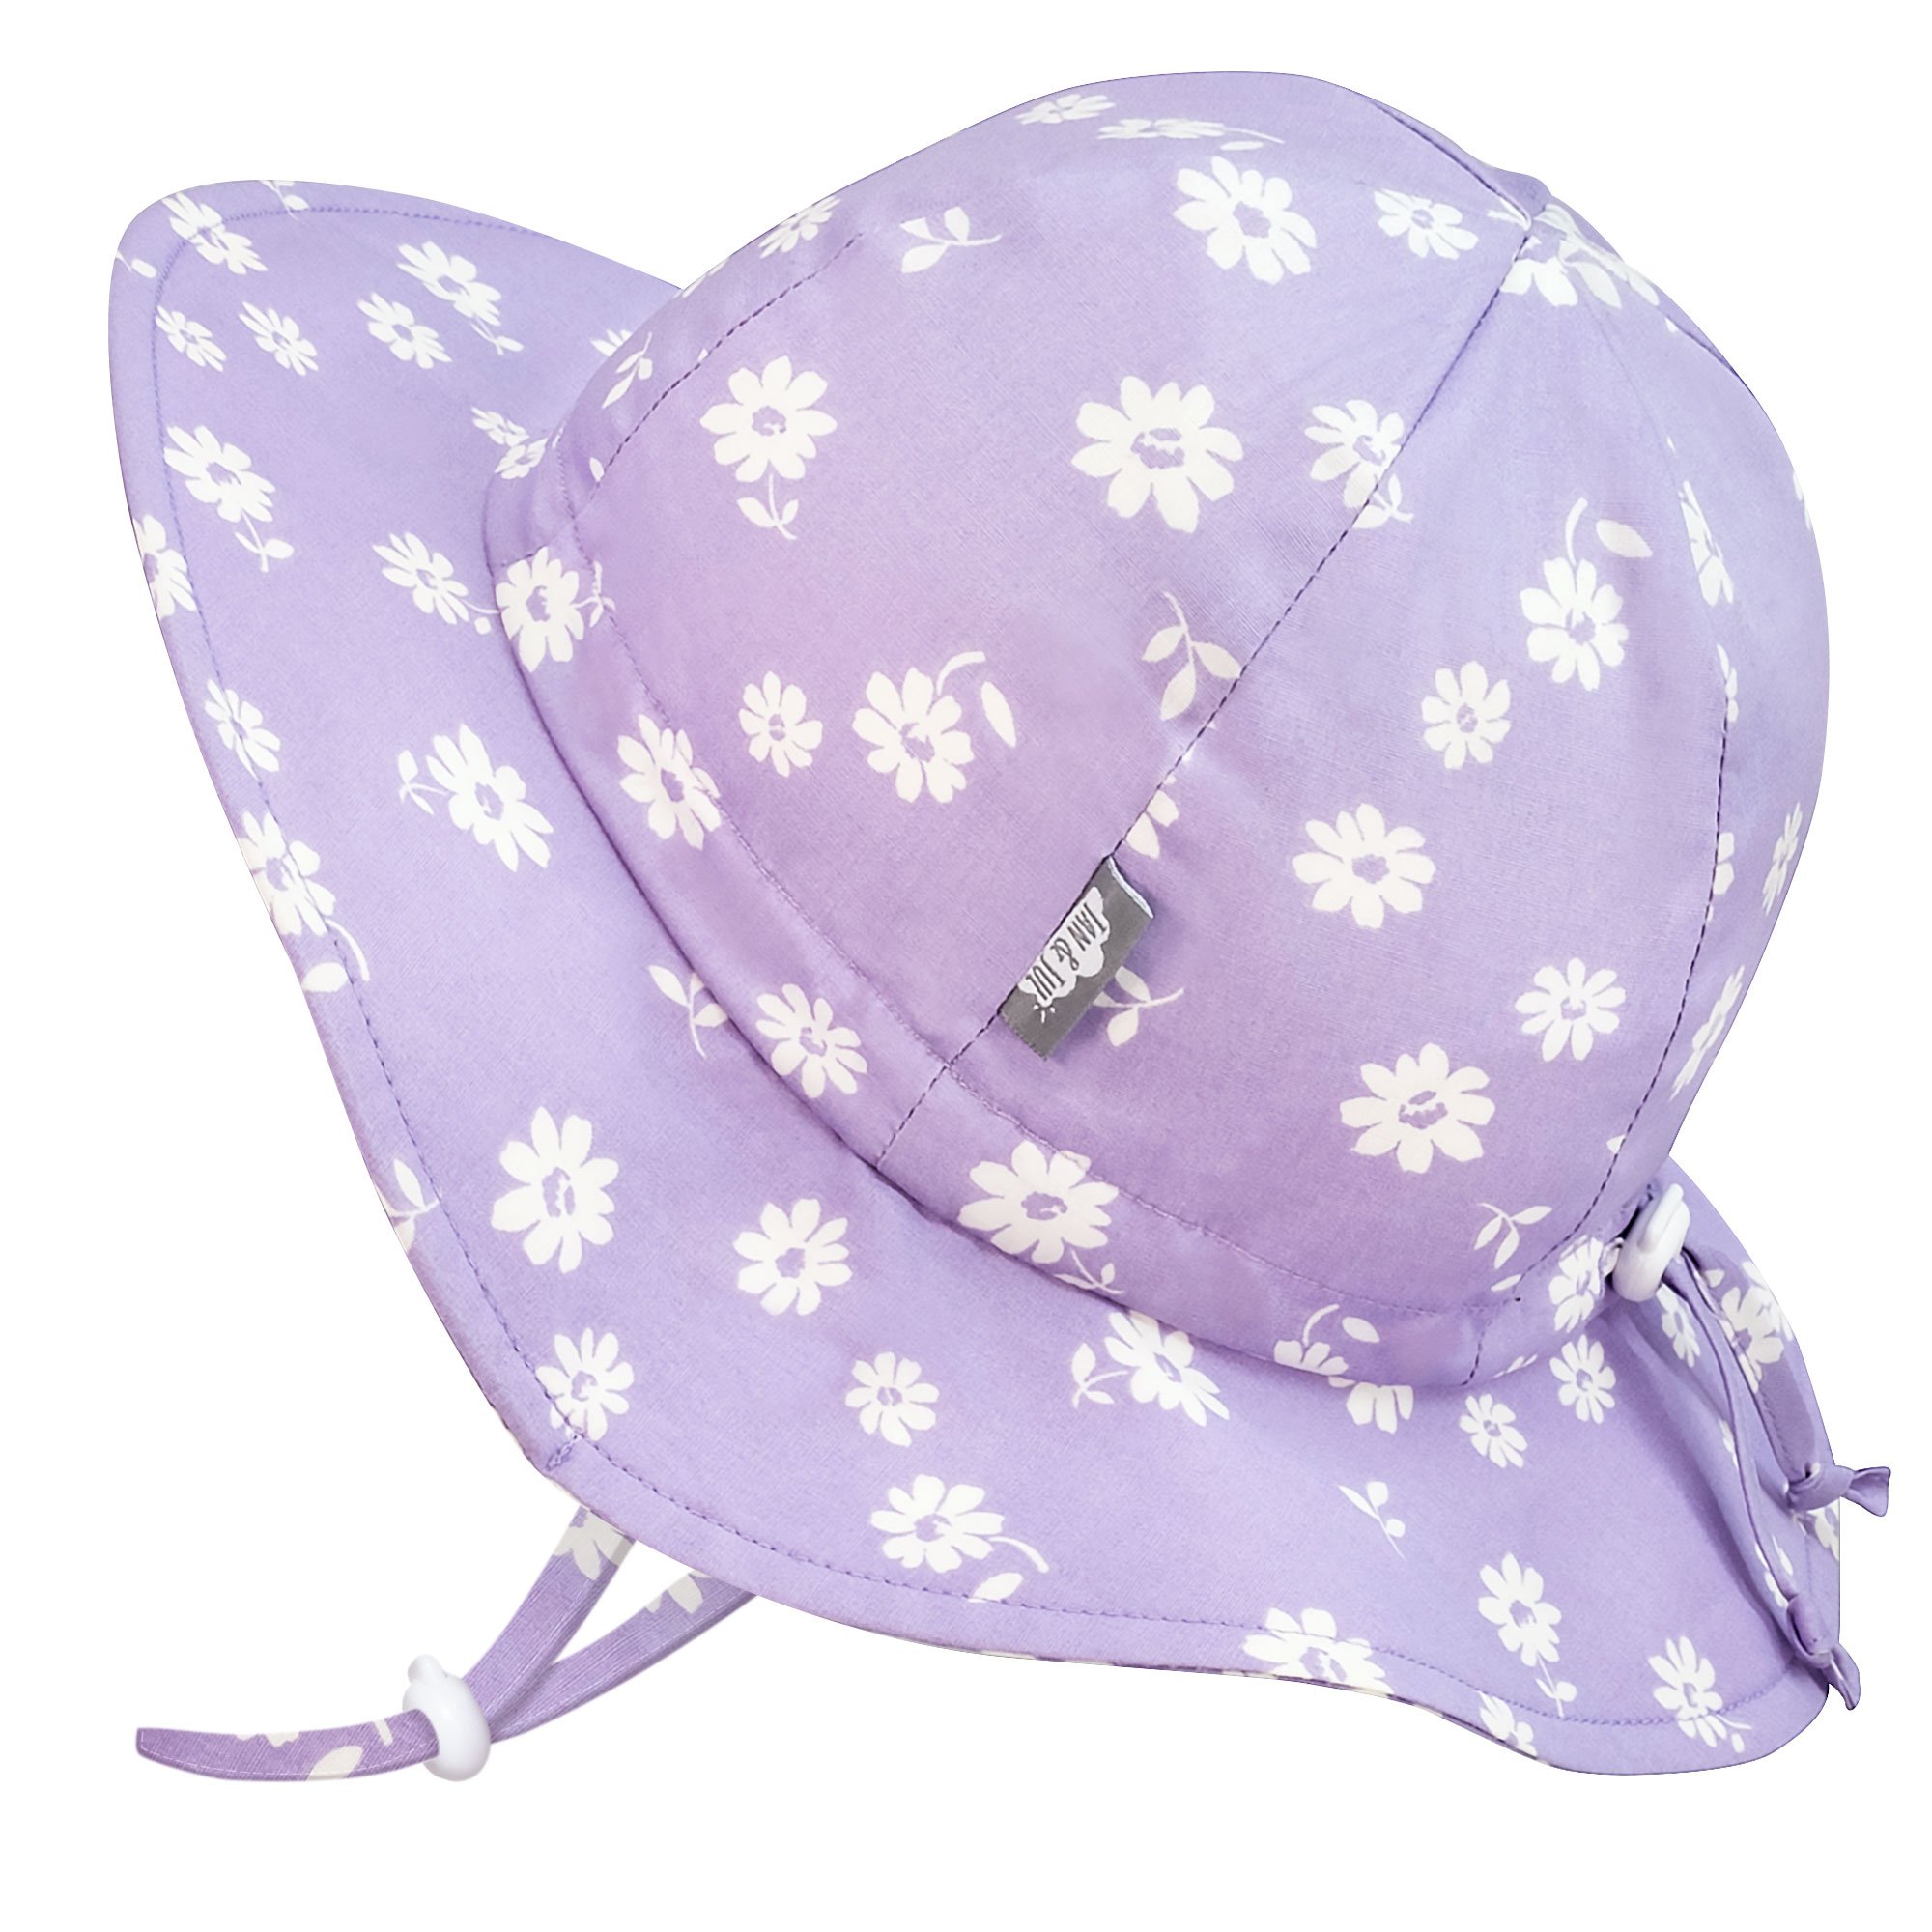 Jan & Jul Adult Cotton Adventure Sun Hat With Neck Flap, Wide Brim UPF50+ Women UV - Purple Daisy